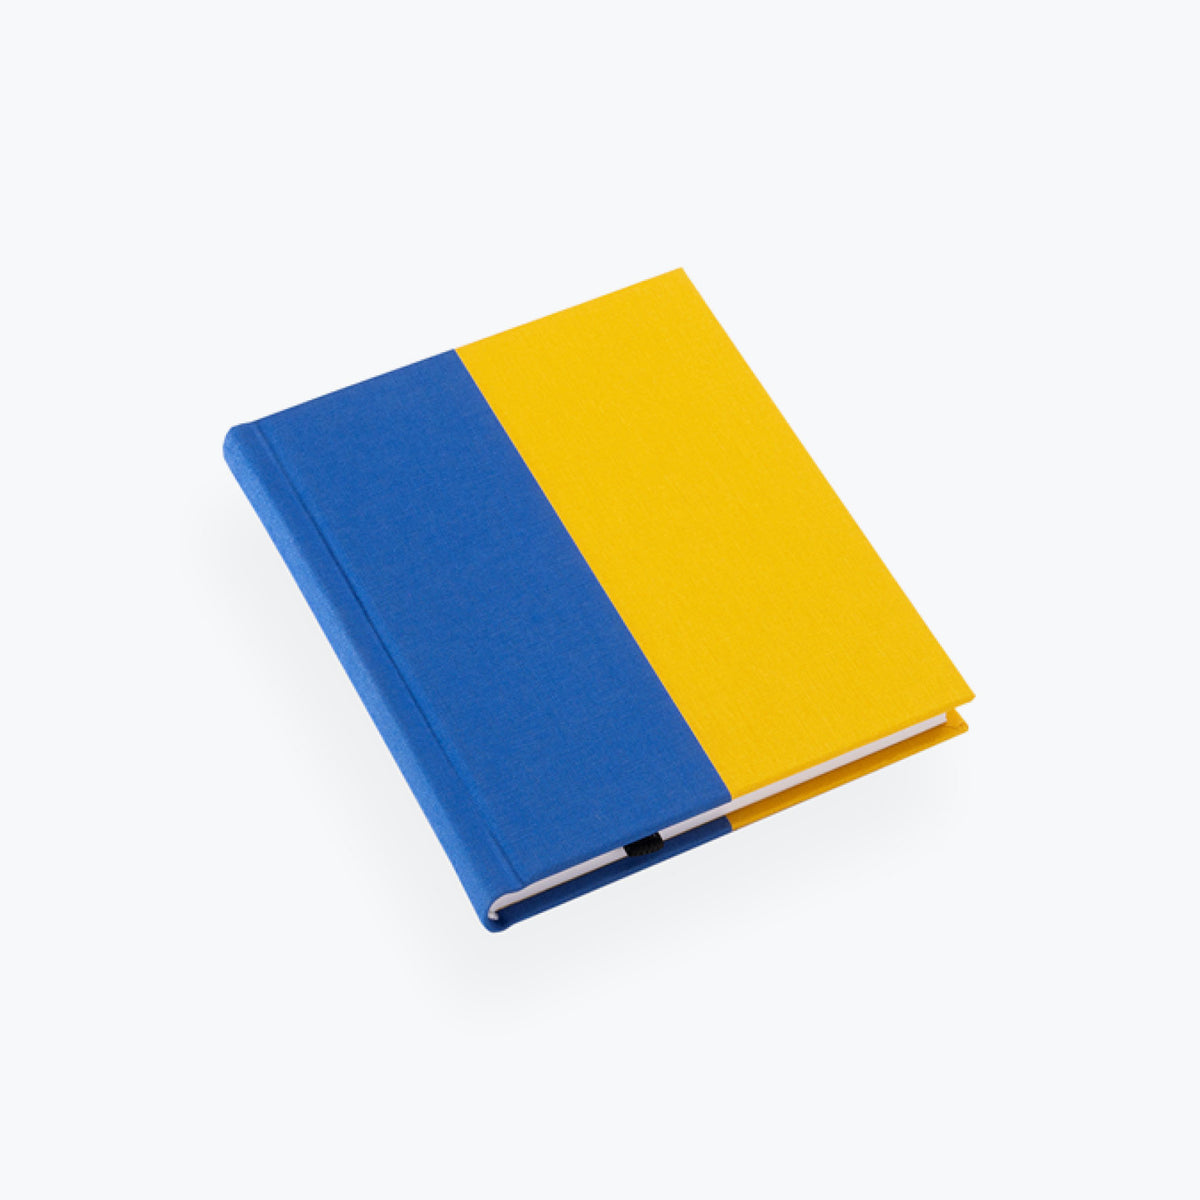 Bookbinders Design - Cloth Notebook - Small - Support Ukraine